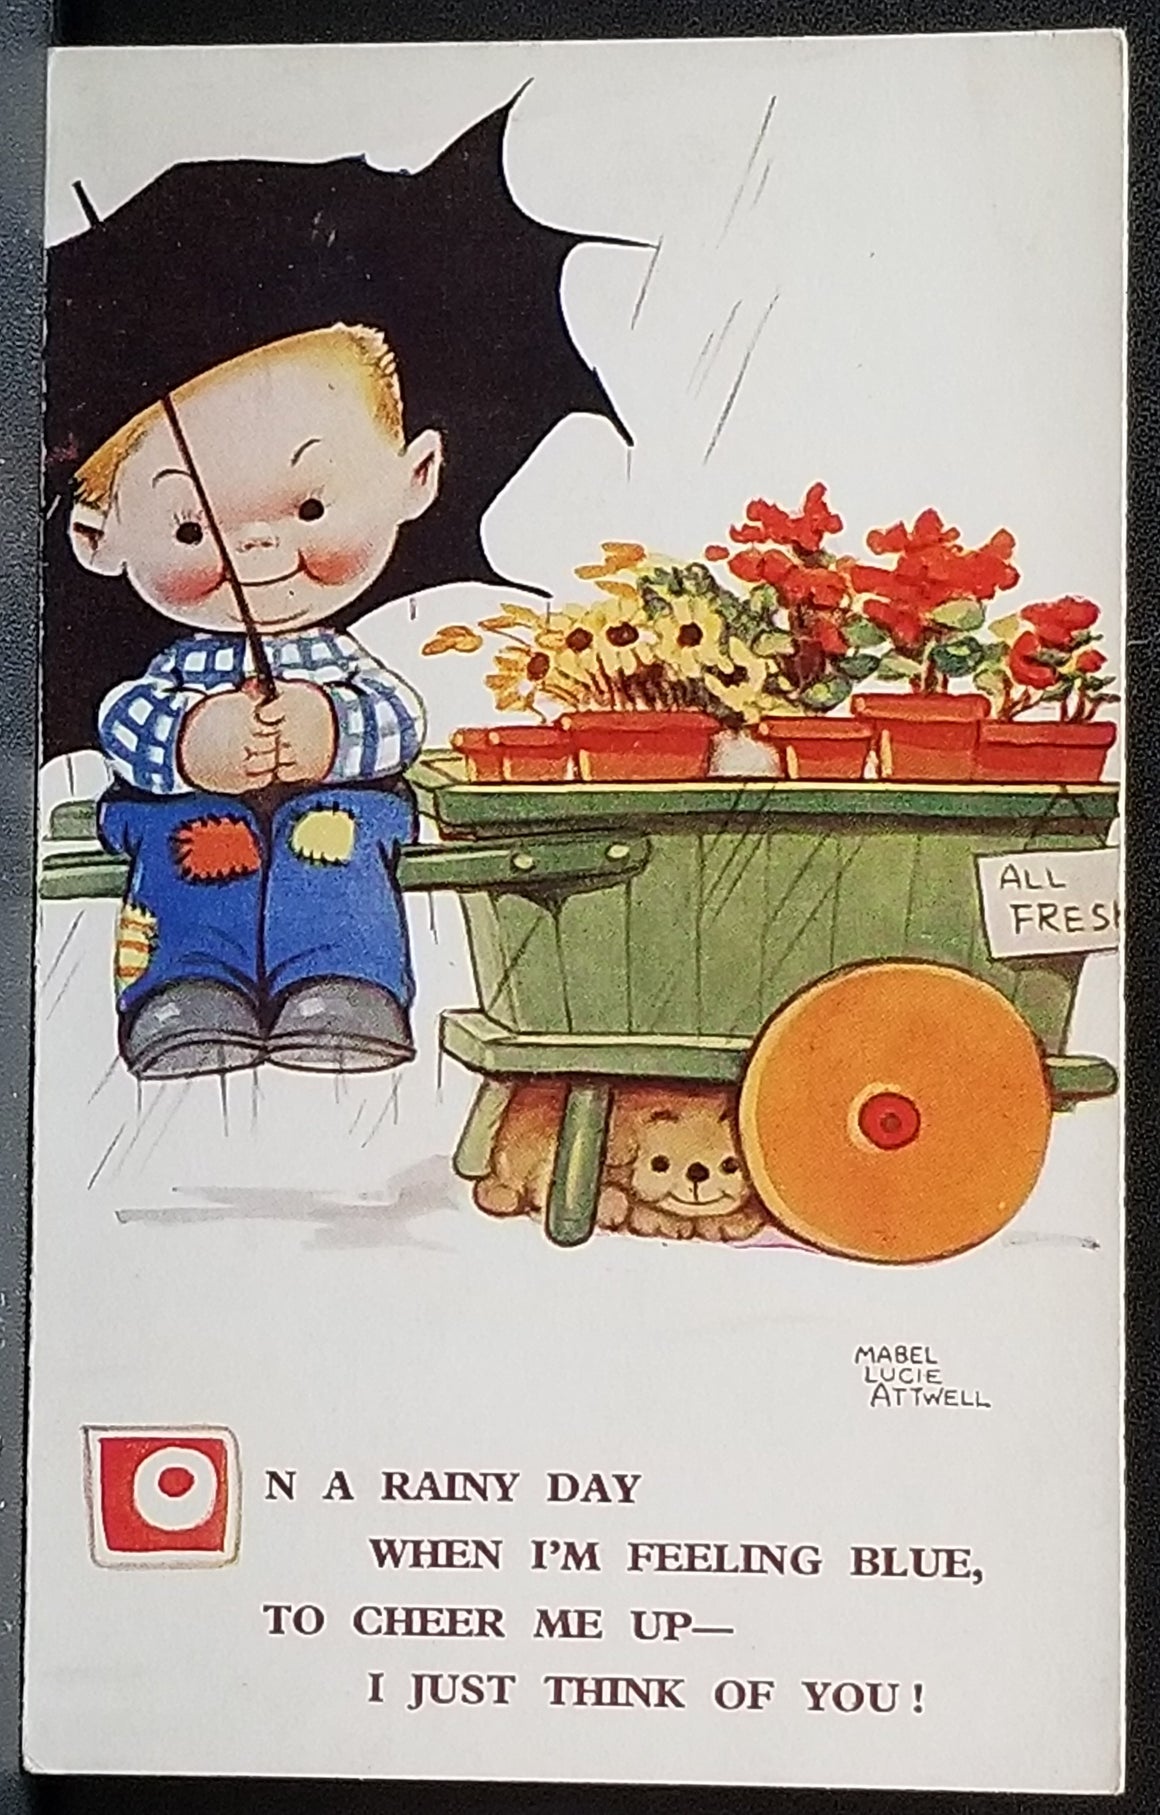 Valentine Postcard Mabel Attwell Little Boy Under Umbrella w/ Flowers for Sale & Puppy at Feet